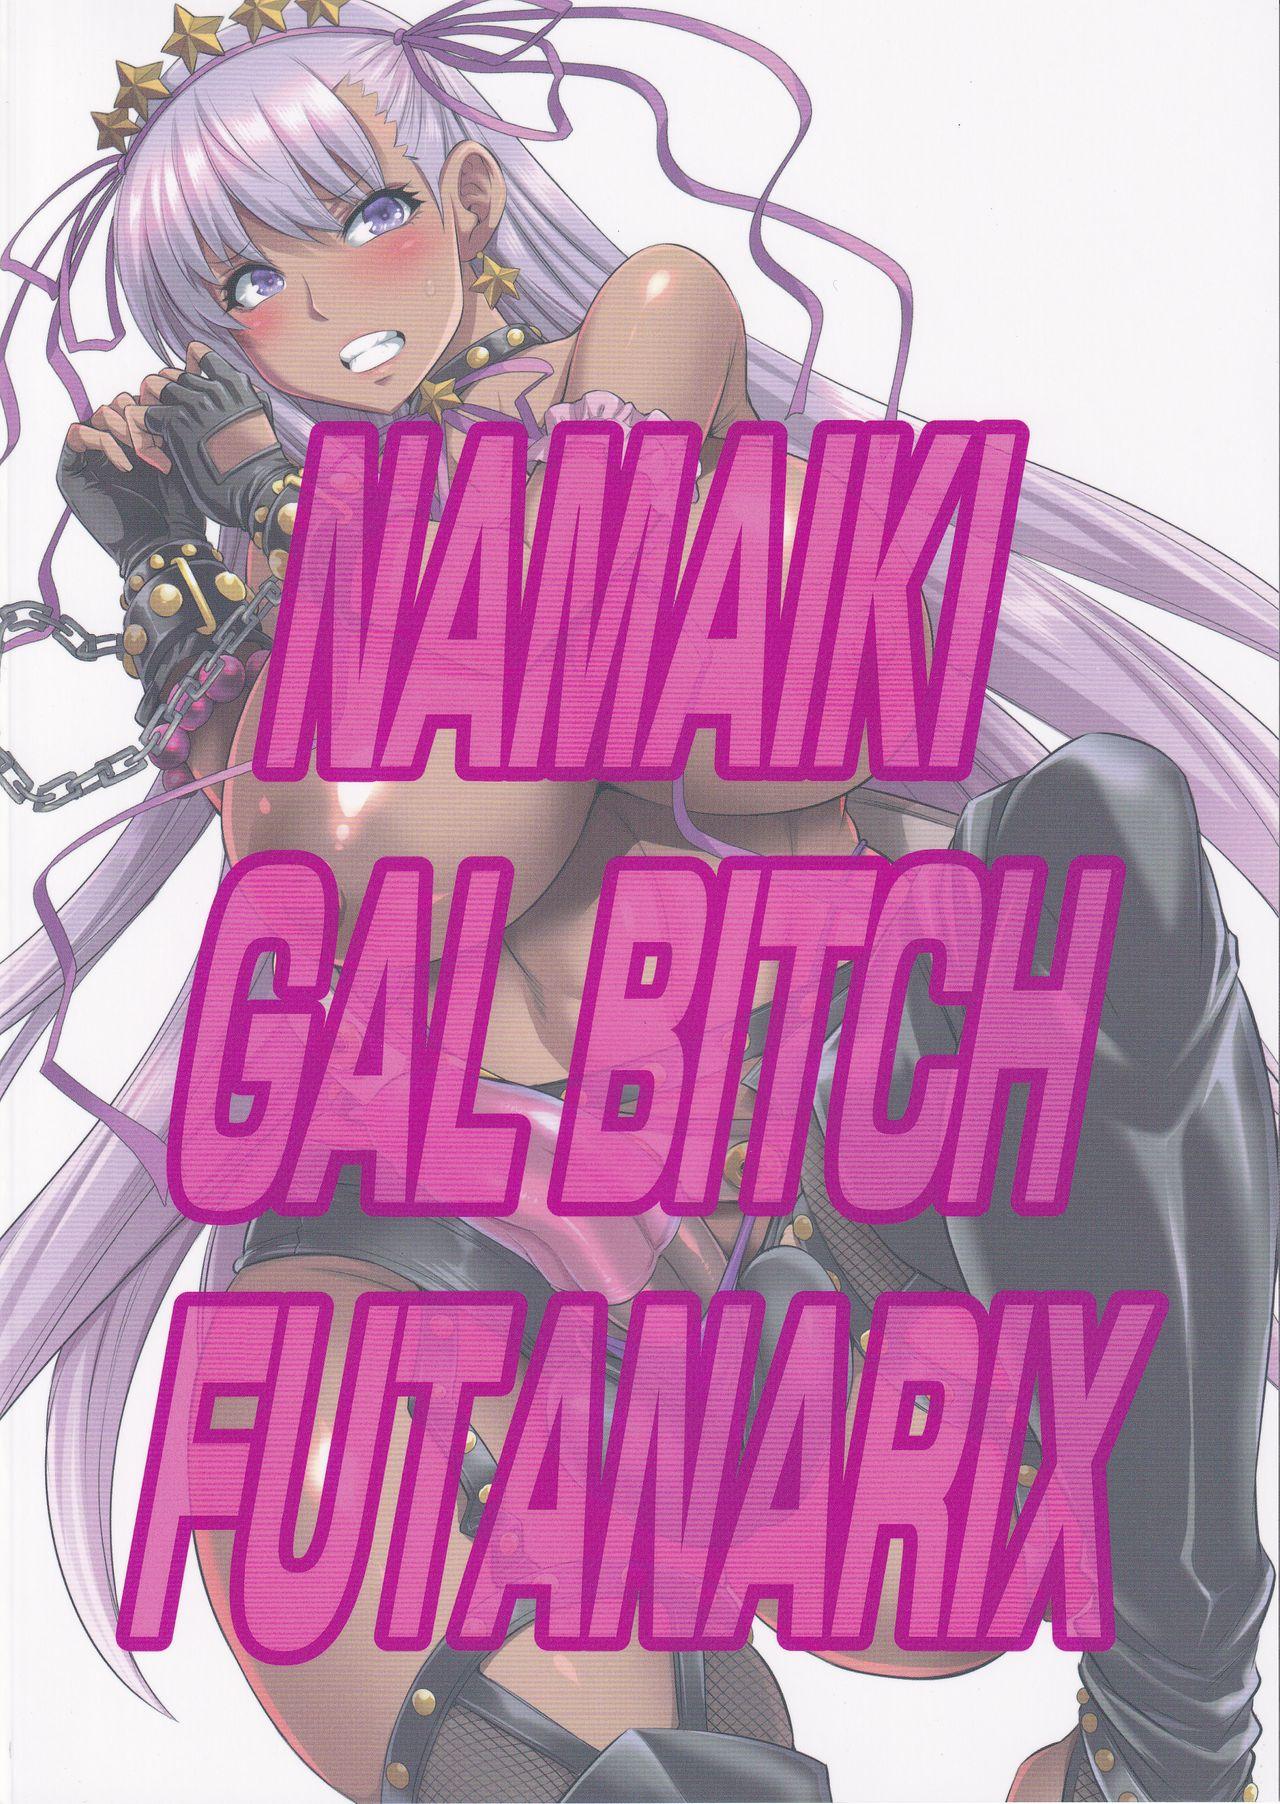 NAMAIKI GAL BITCH FUTANARIX 0